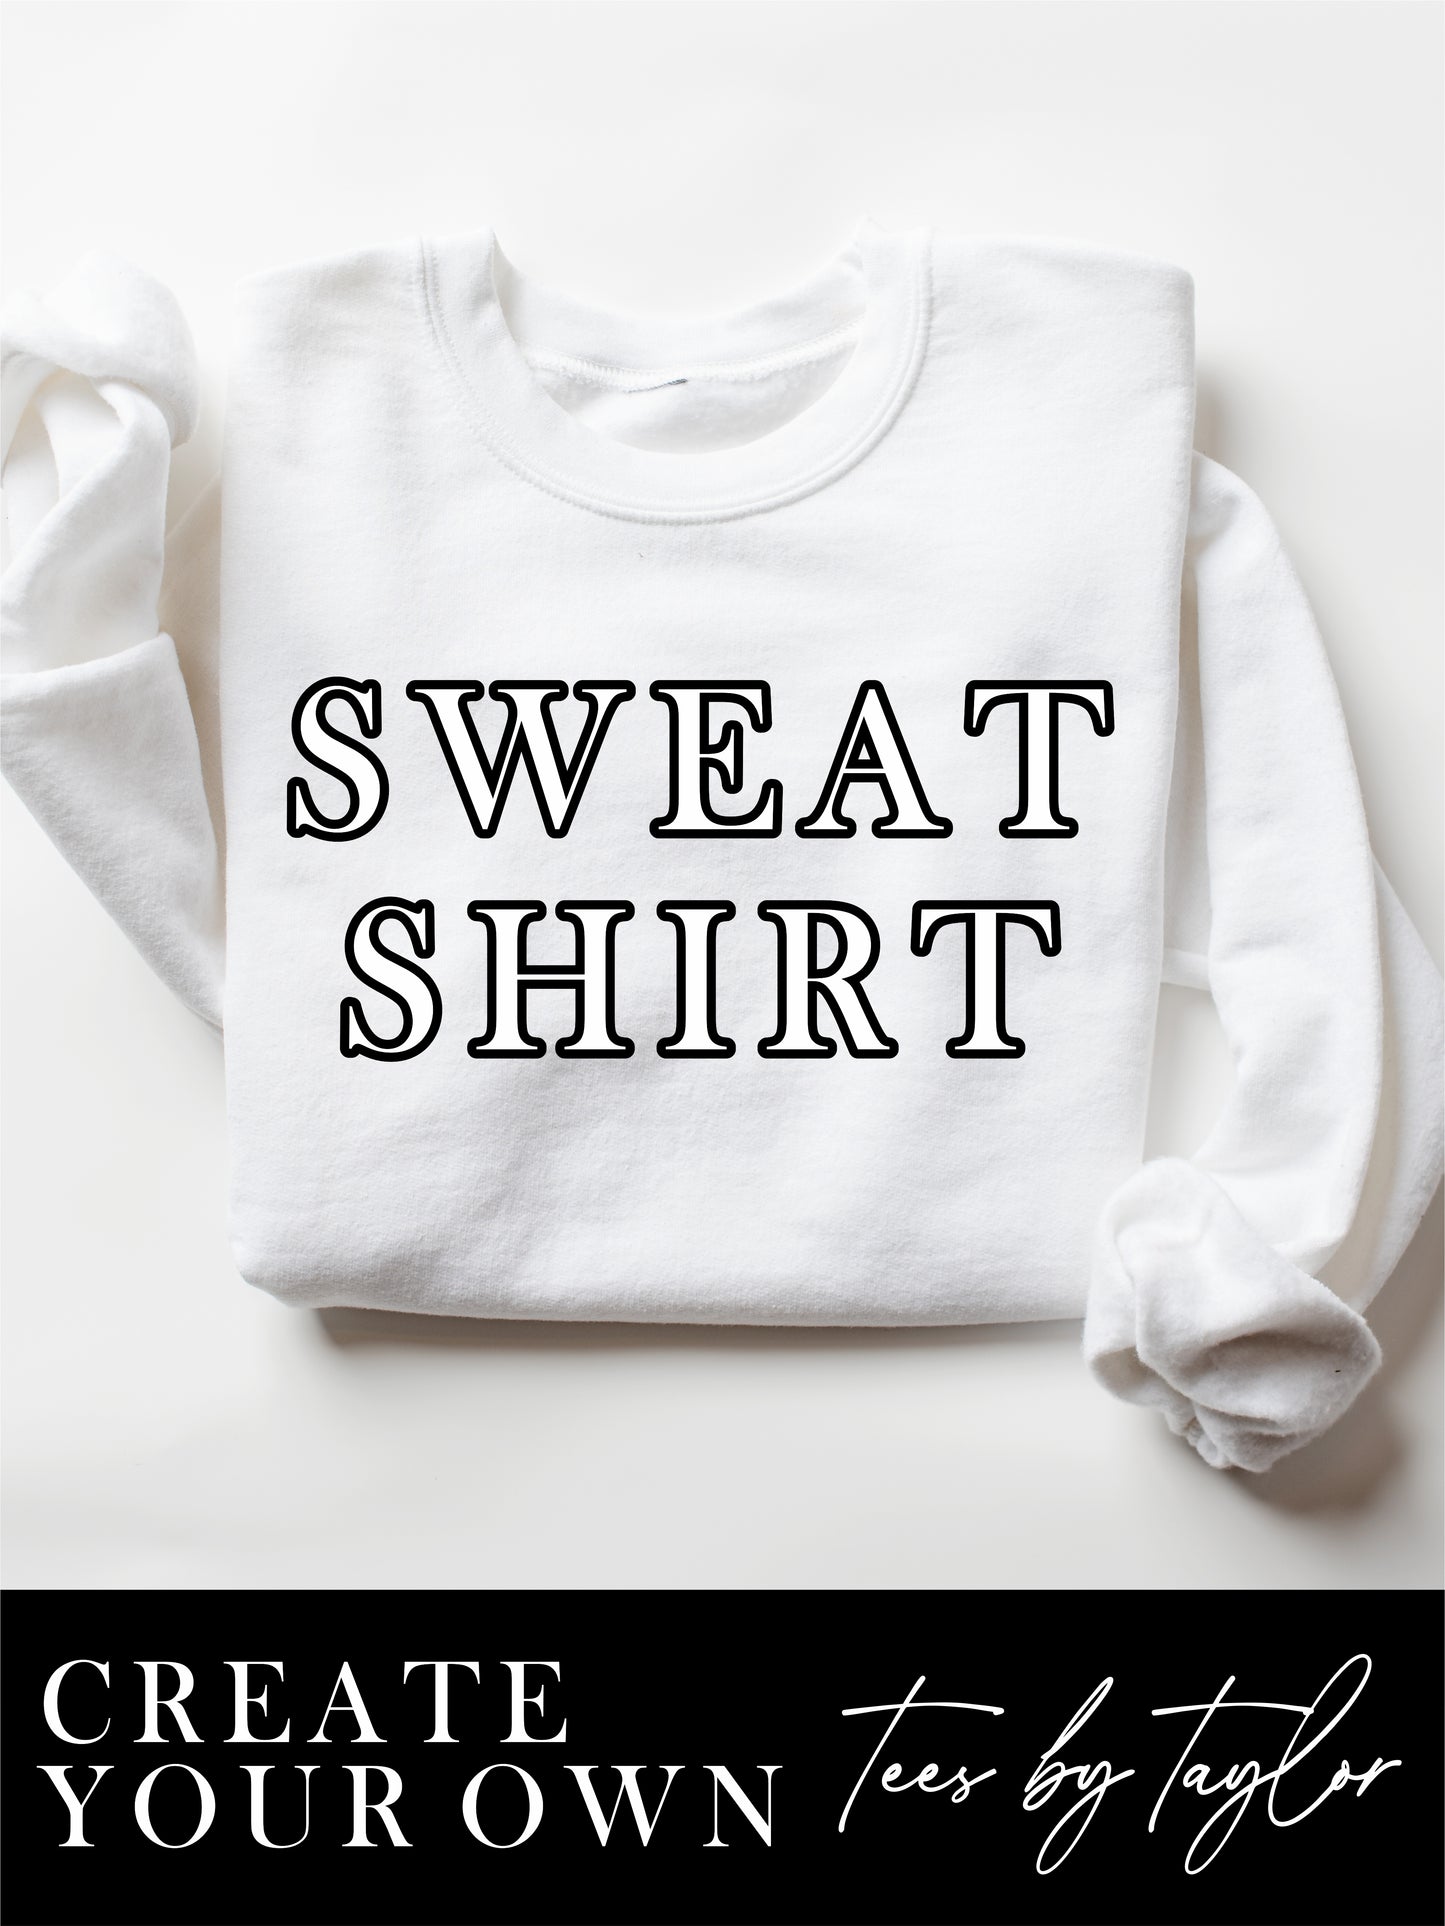 CREATE YOUR OWN - Sweatshirt